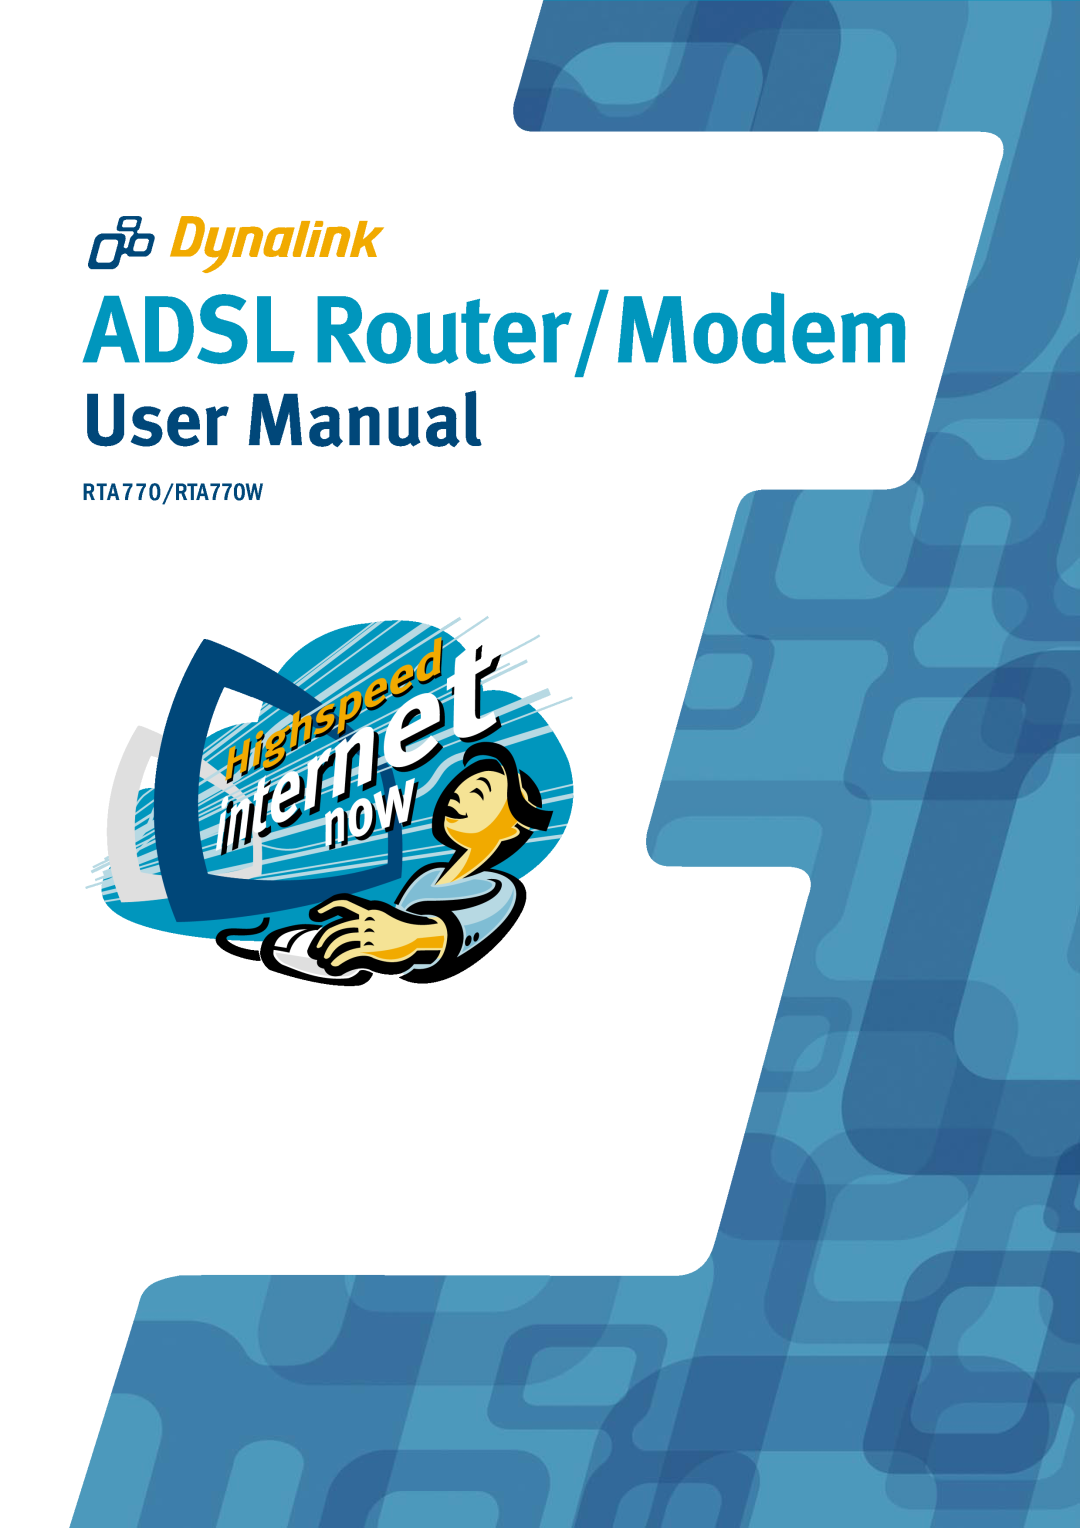 Dynalink user manual ADSL Router/Modem, User Manual, RTA770/RTA770W 